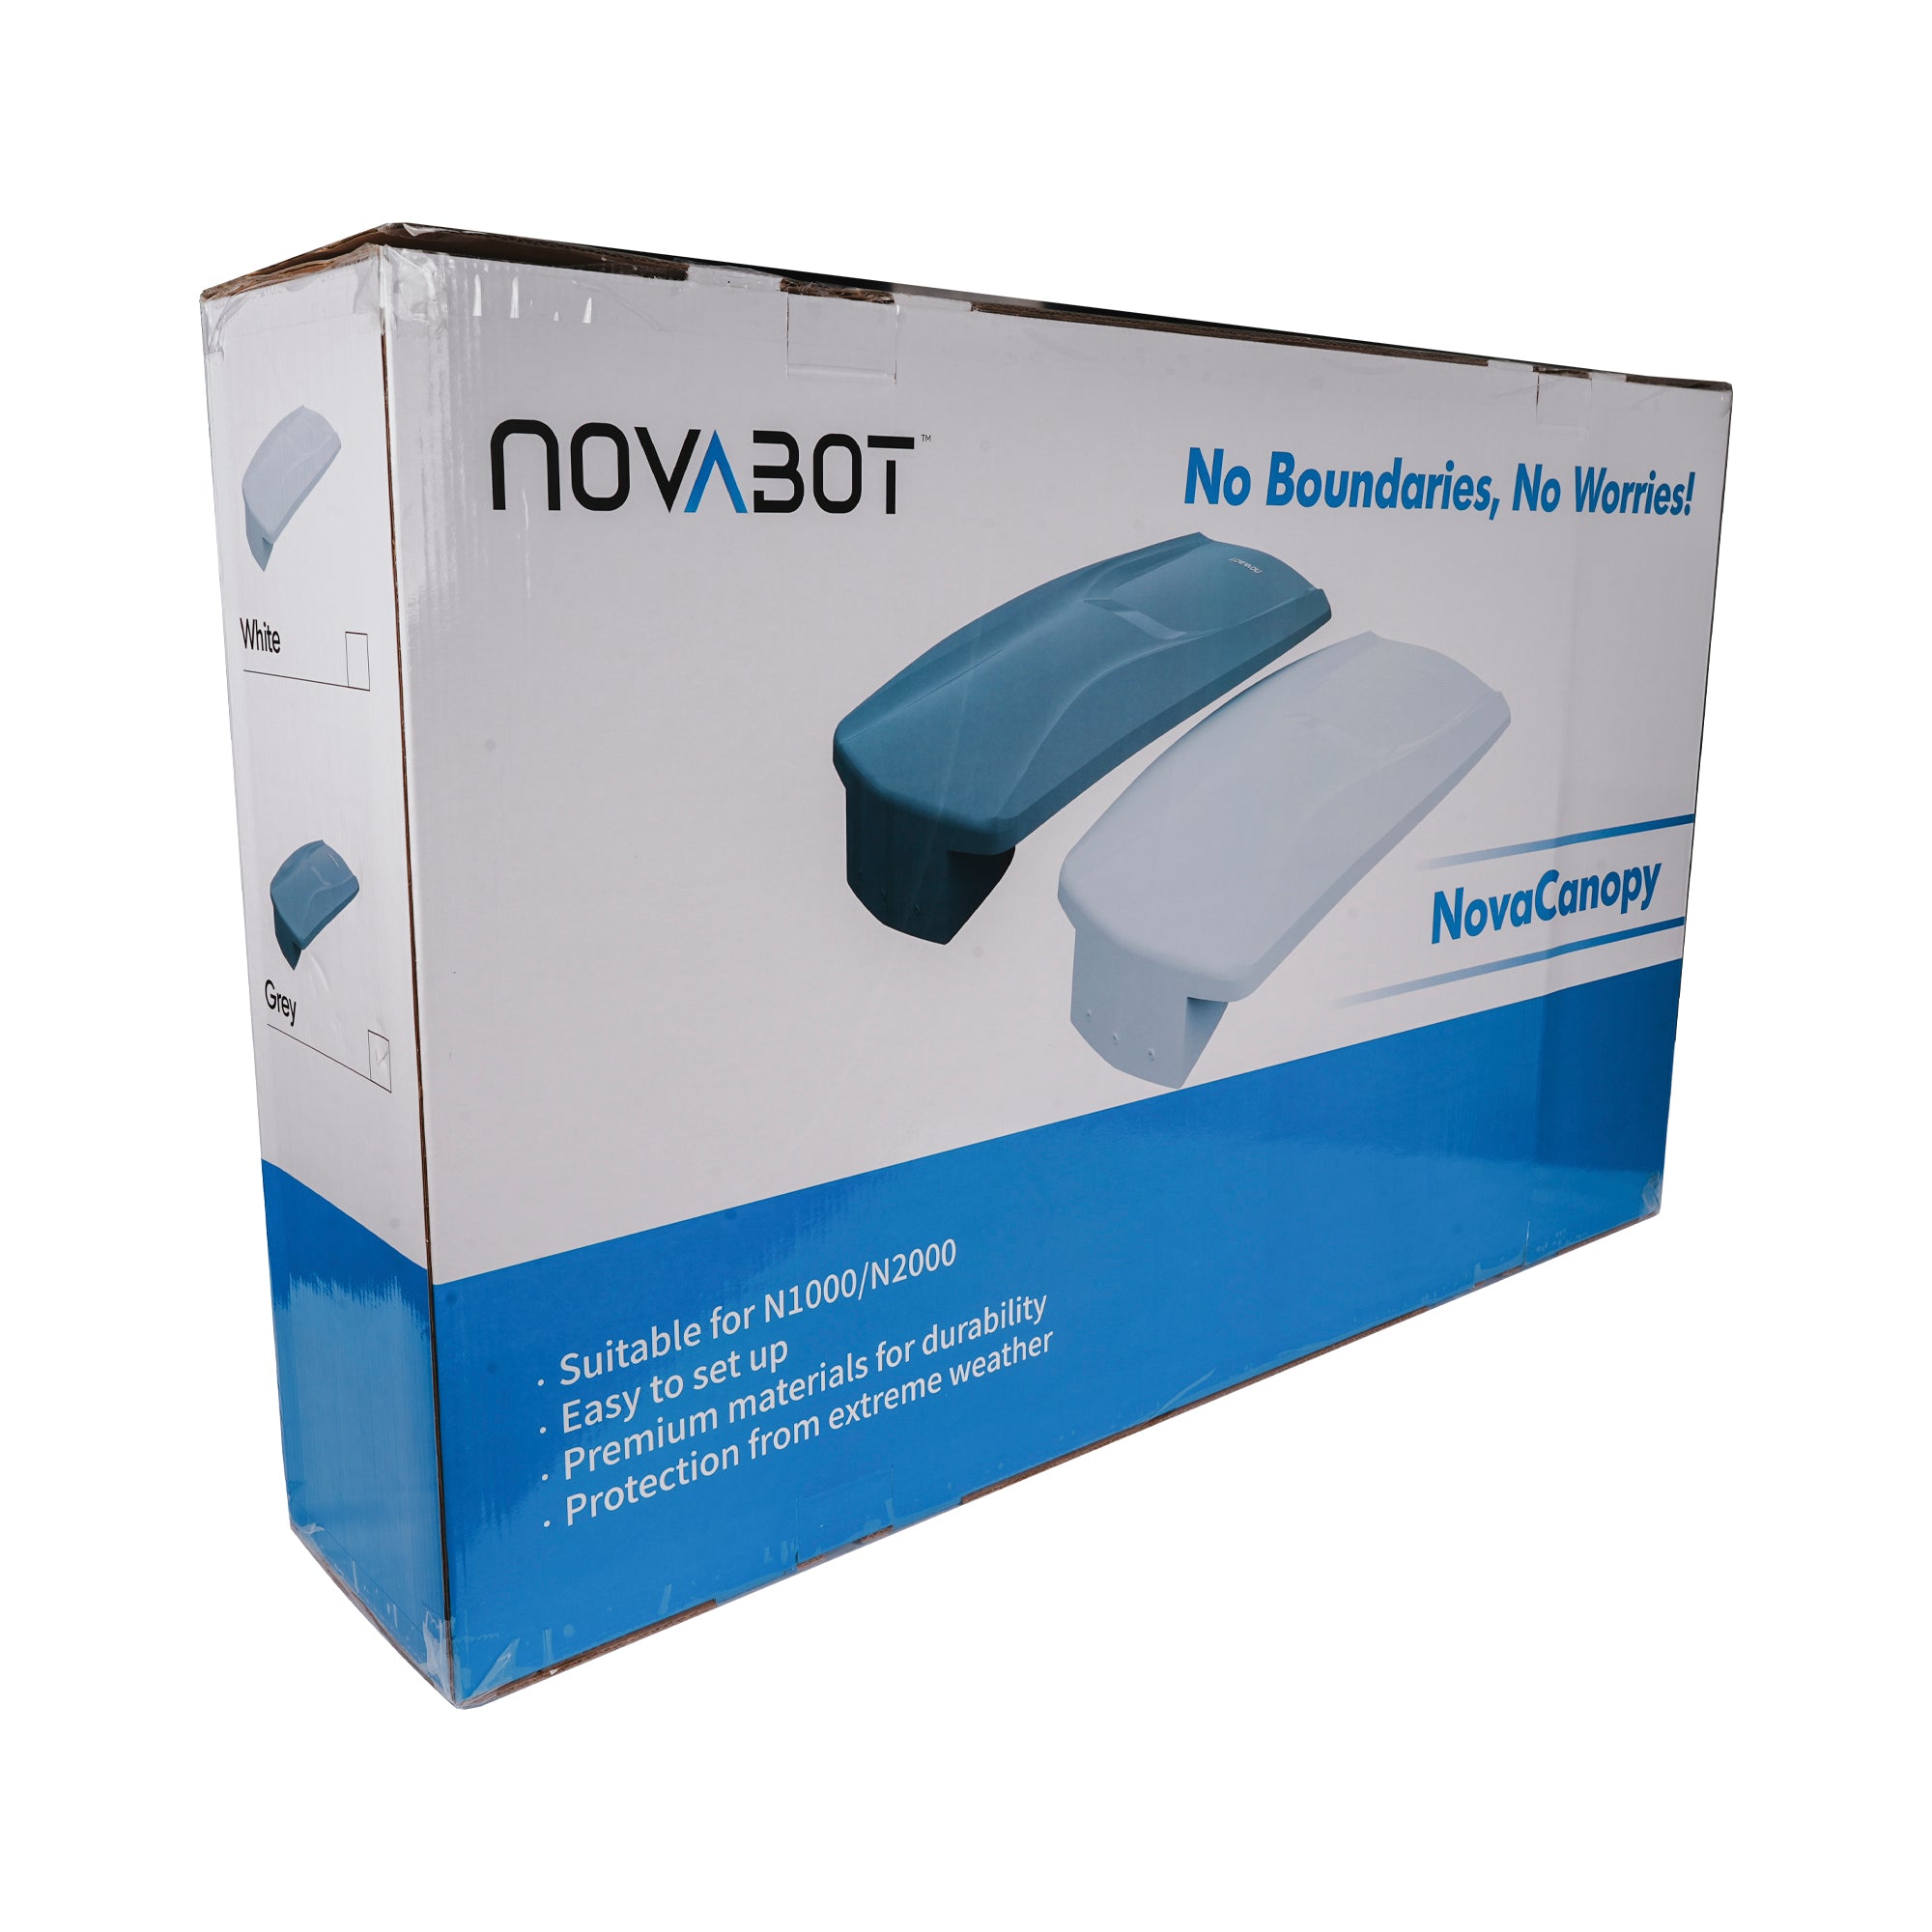 (White) NOVABOT Robot Mower Garage Roof, Lawn Mower Cover, Lawn Mower Shelter